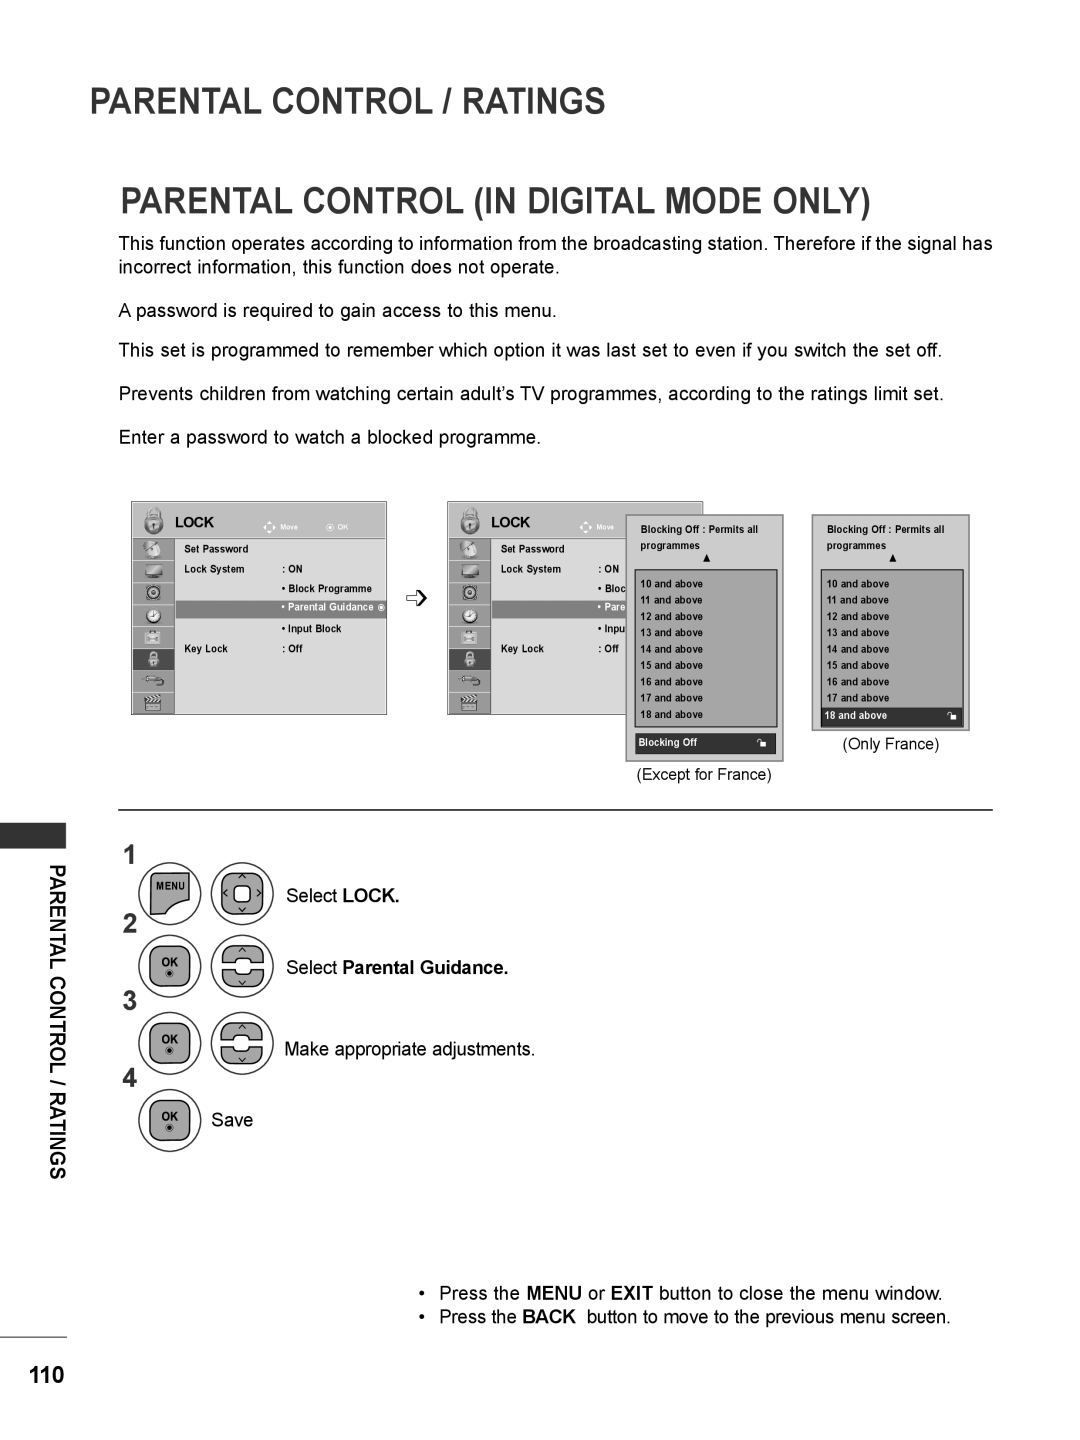 LG Electronics M2380D, M2780DF Parental Control / Ratings Parental Control In Digital Mode Only, Select Parental Guidance 